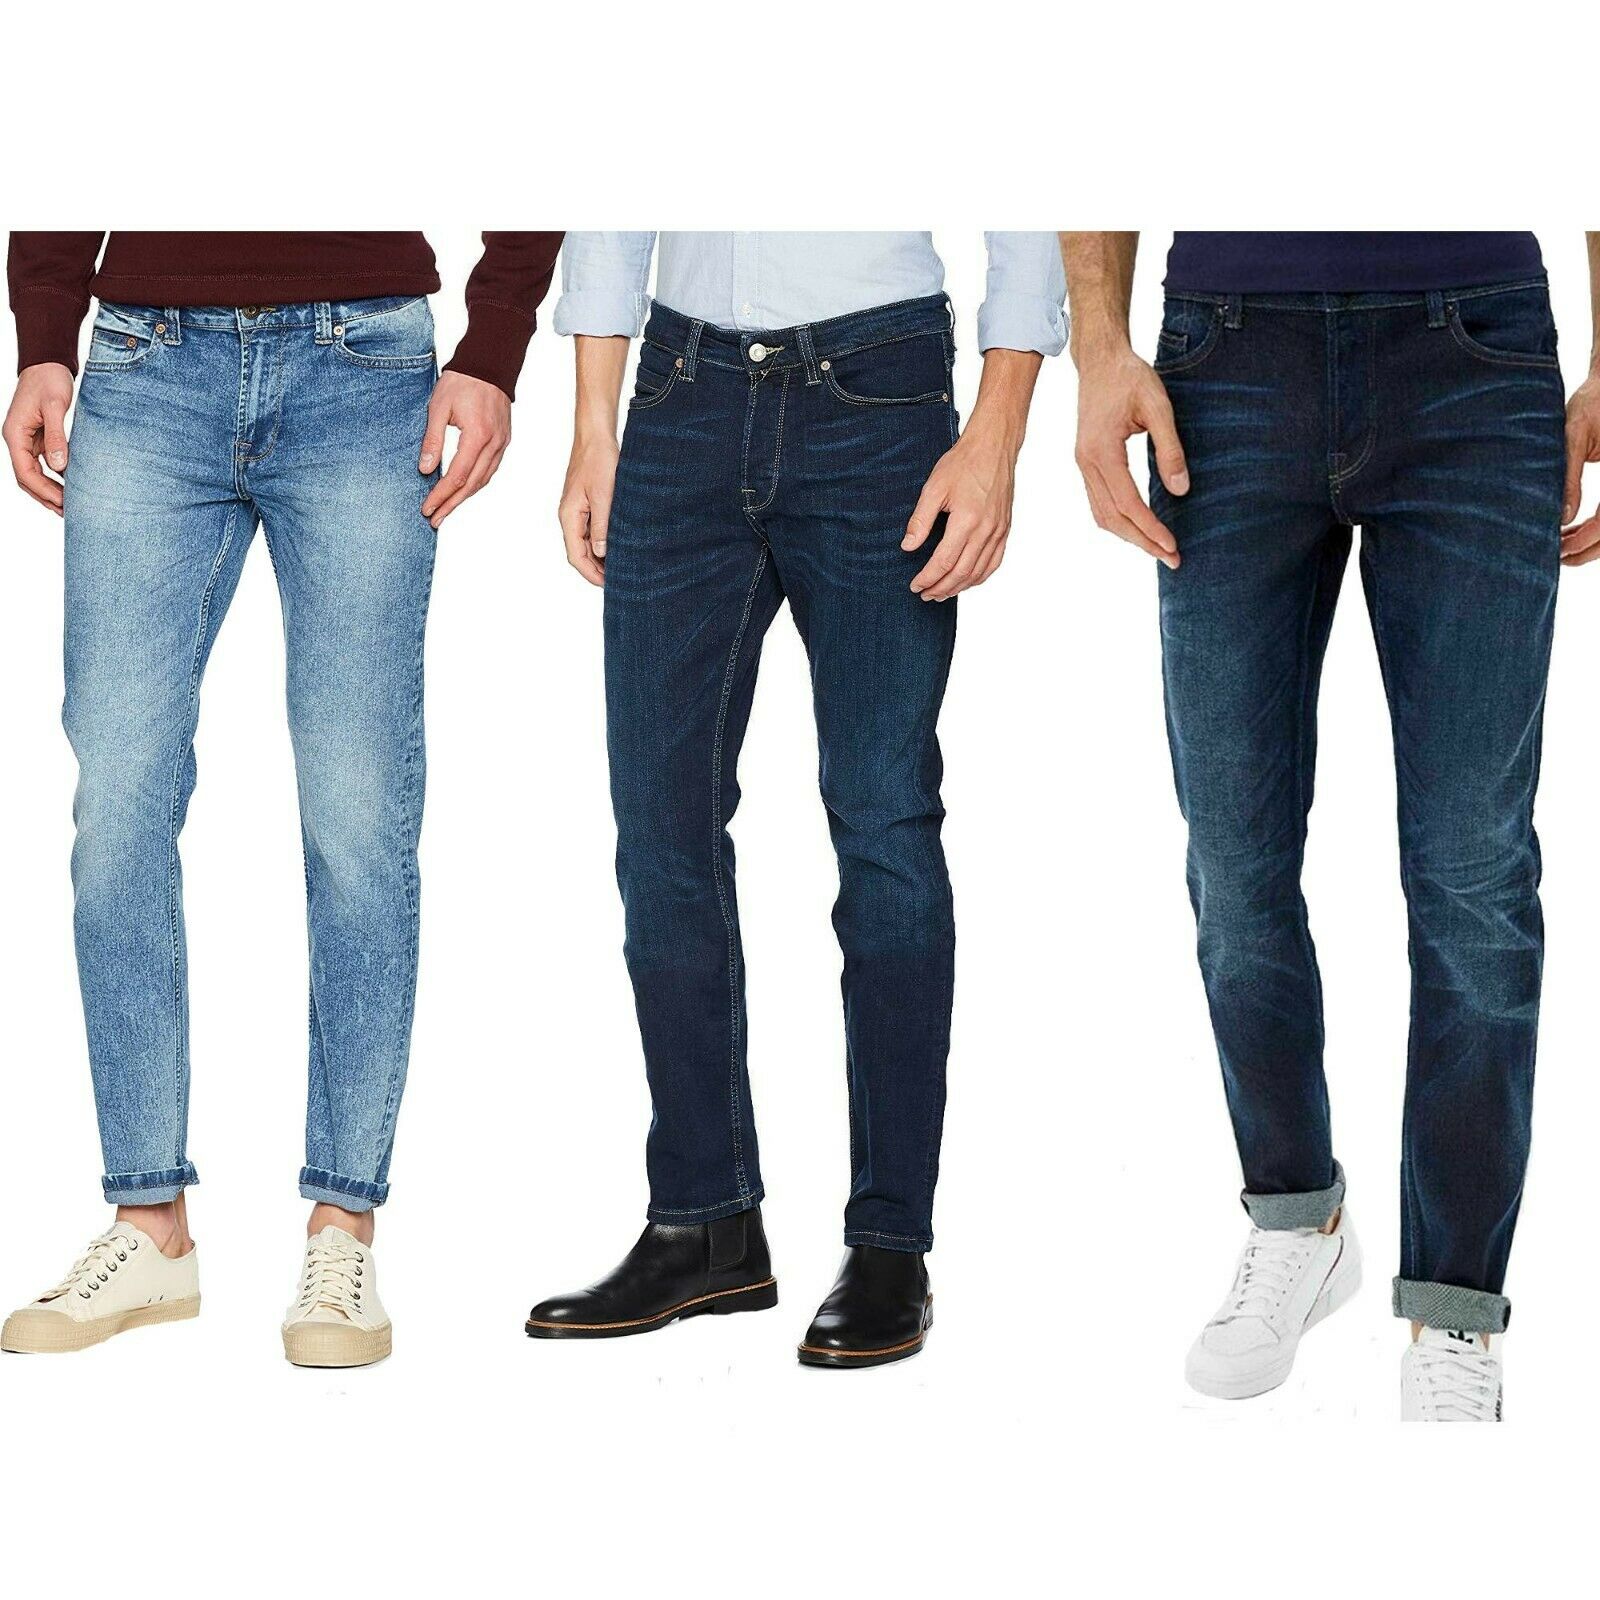 Only & Sons Mens Skinny Fit Jeans Slim Stretch Denim Pants Waist Sizes ...